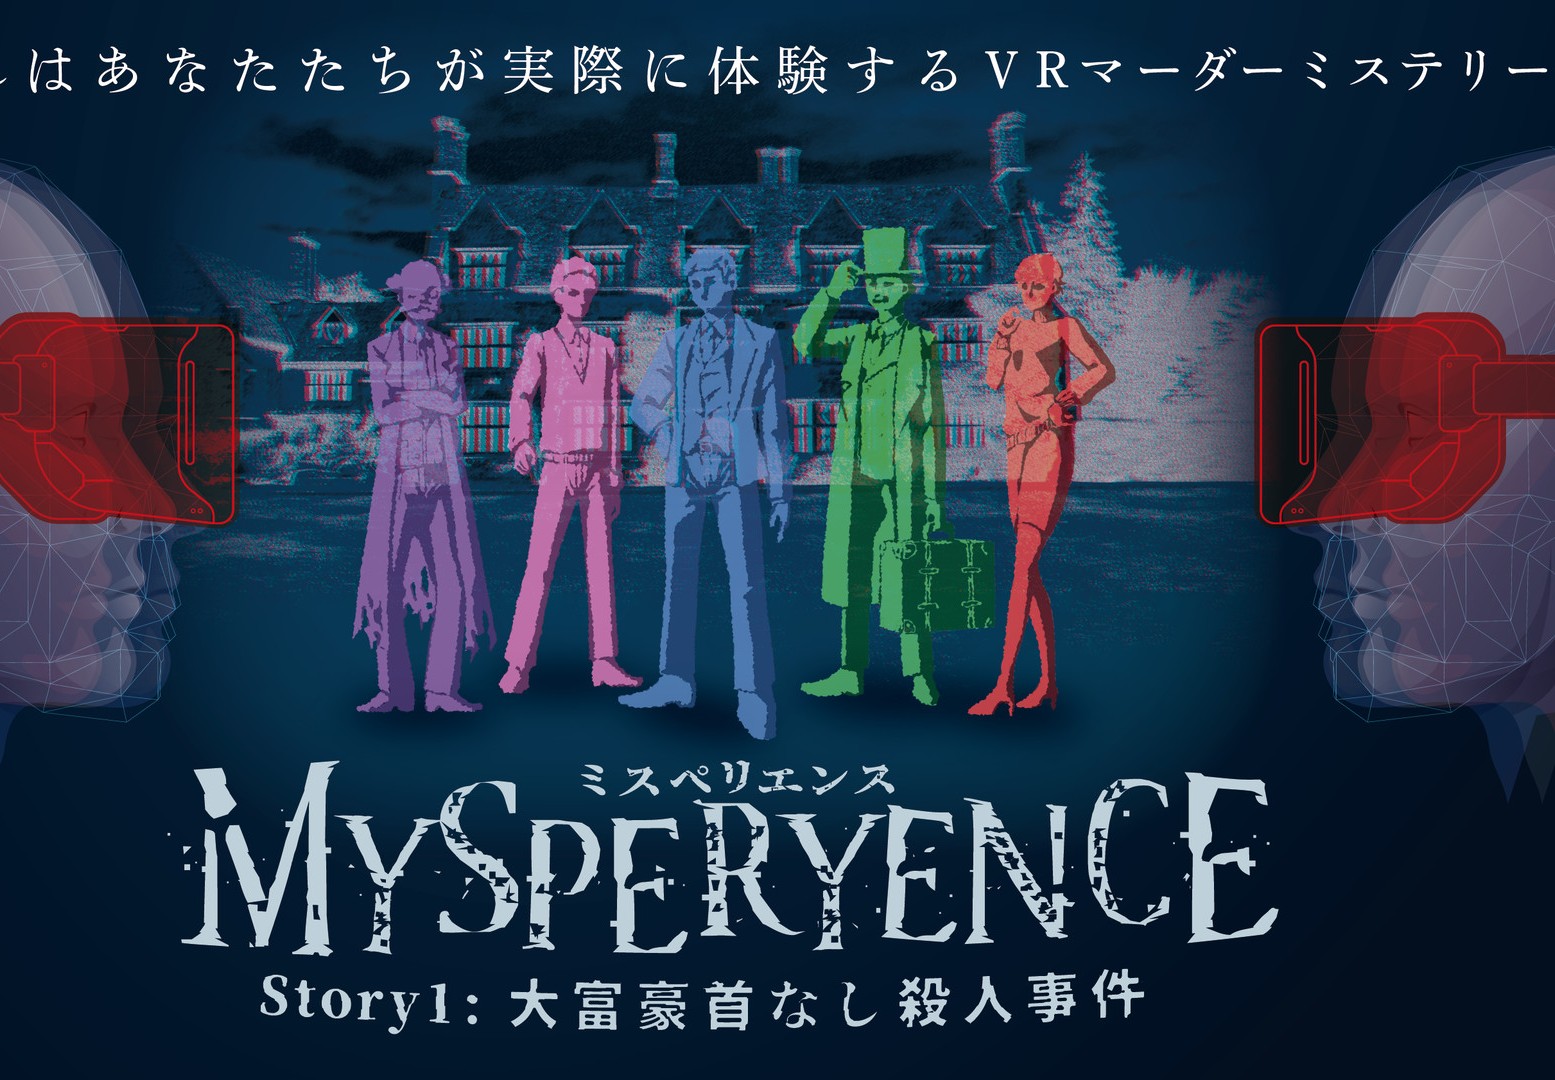 VR剧本杀游戏《MYSPERYENCE》第1弹将于4月5日发售